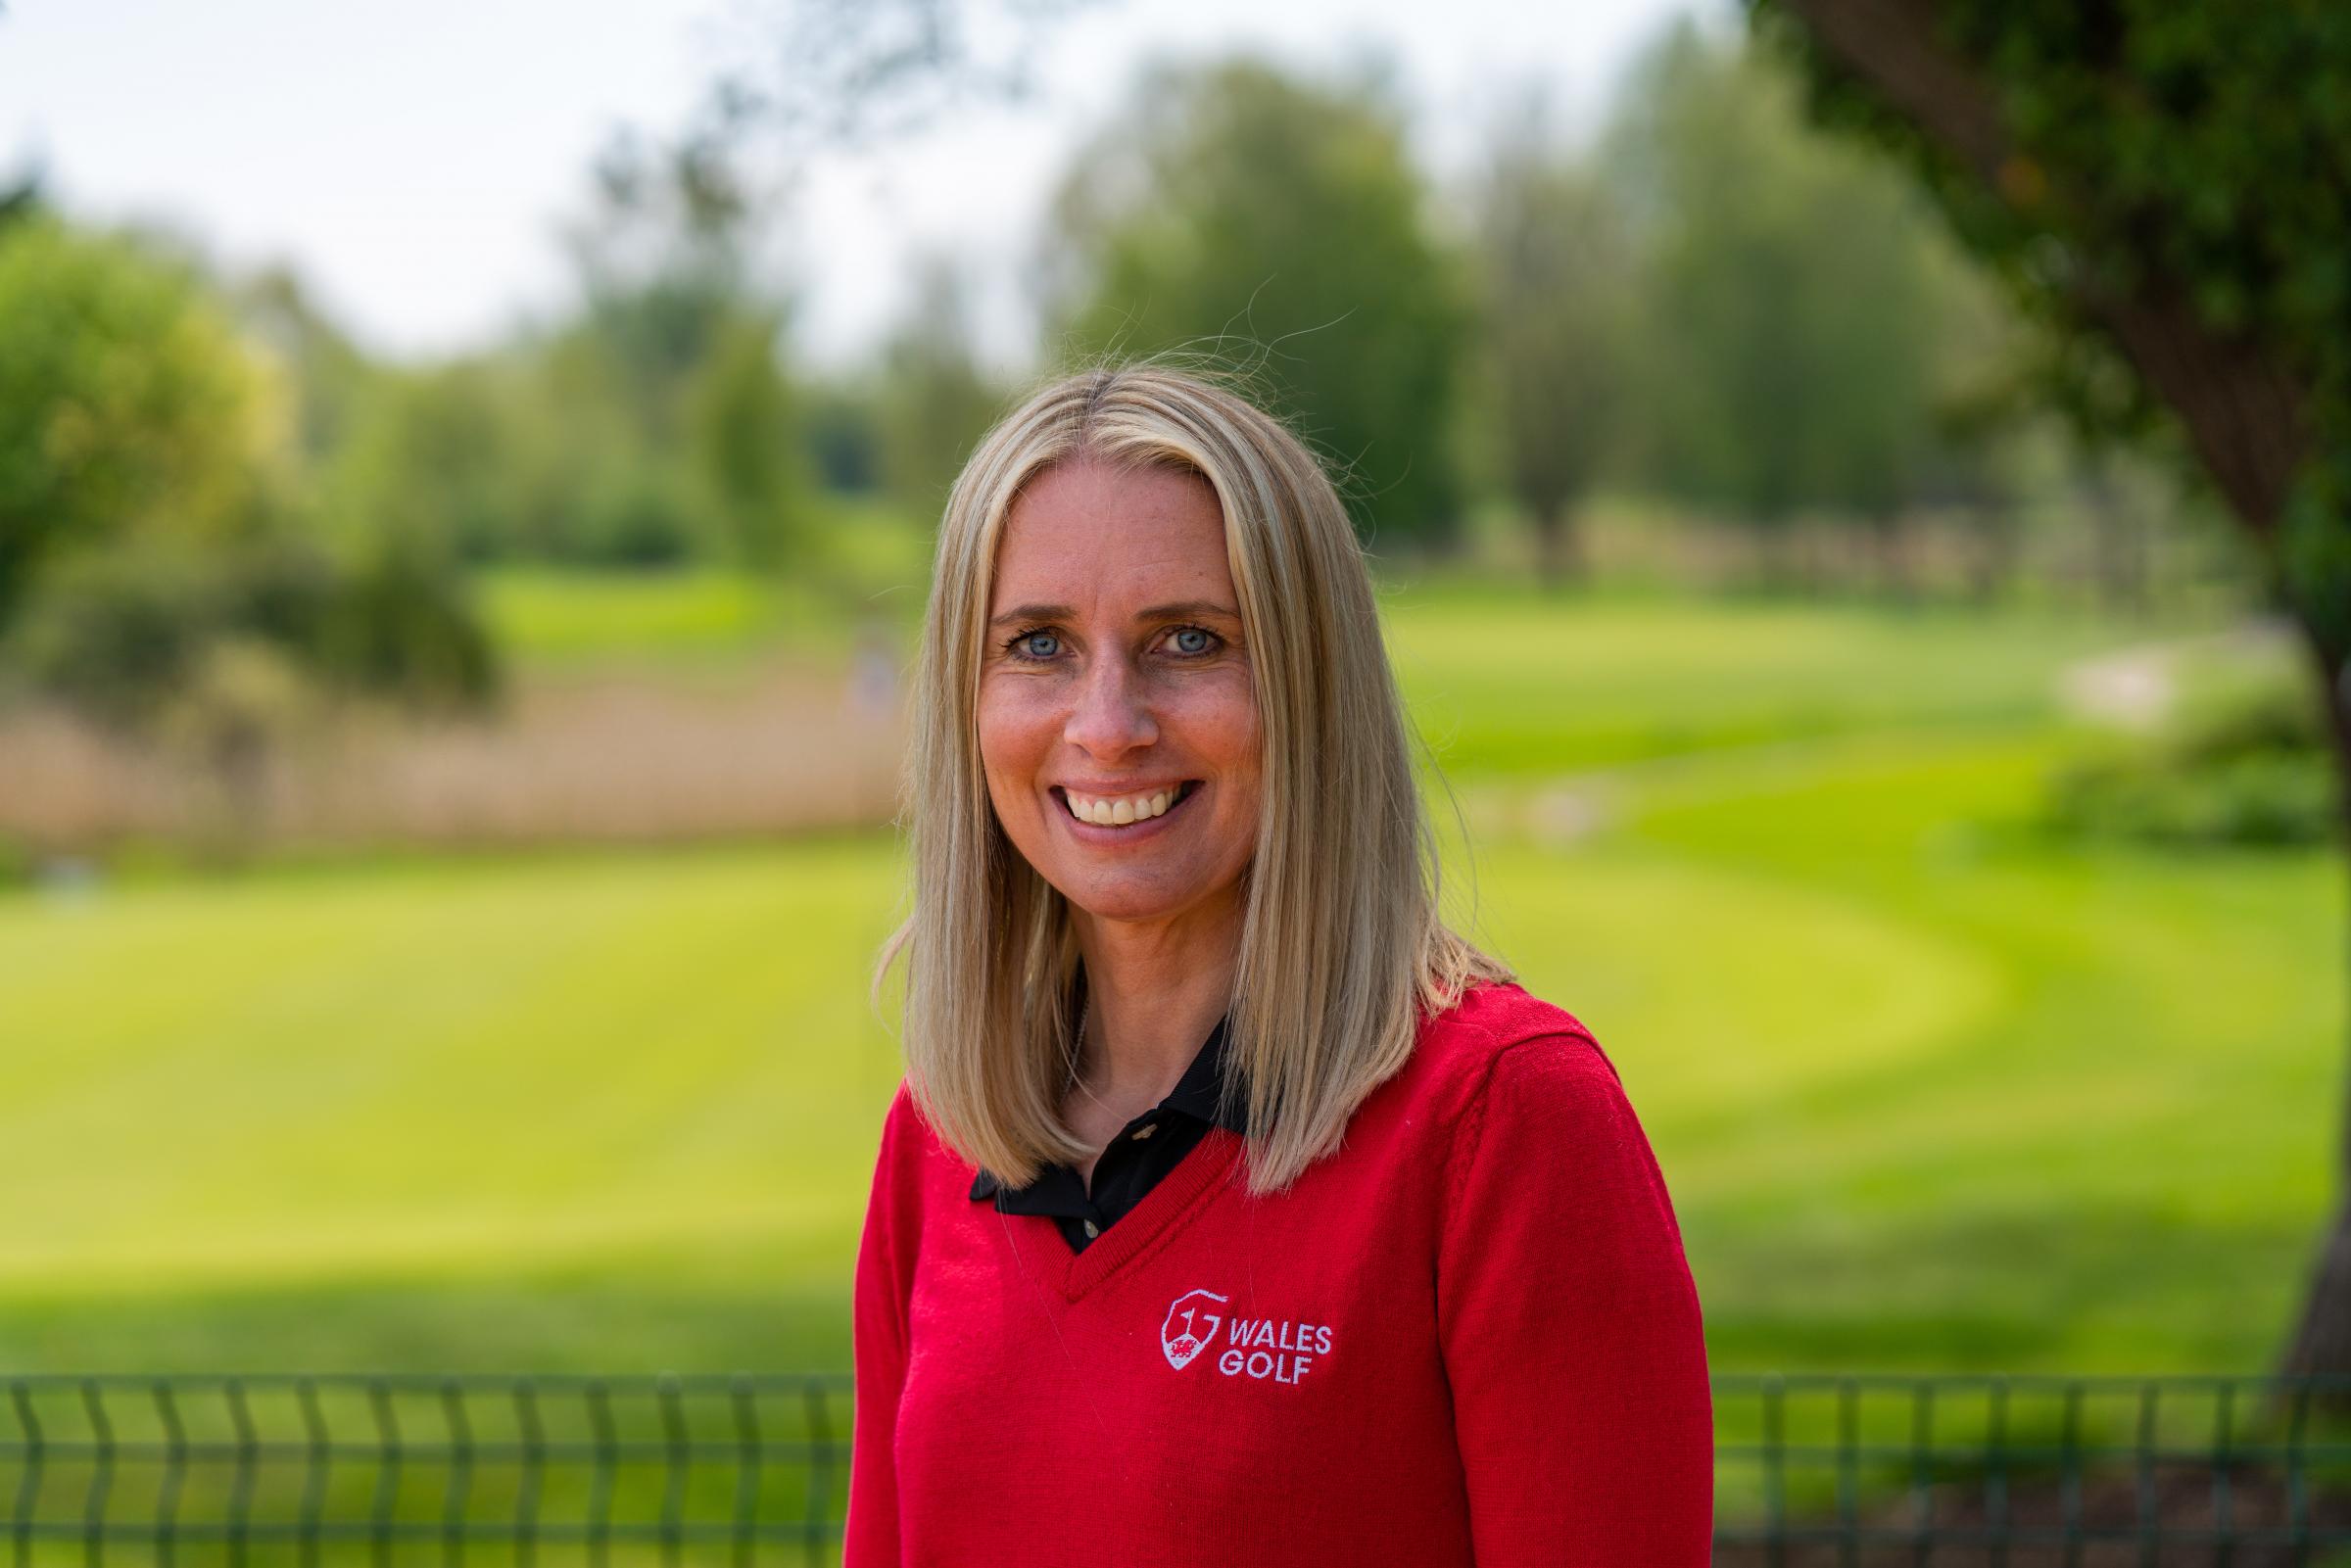 BOSS: Wales Golf chief executive Hannah McAllister